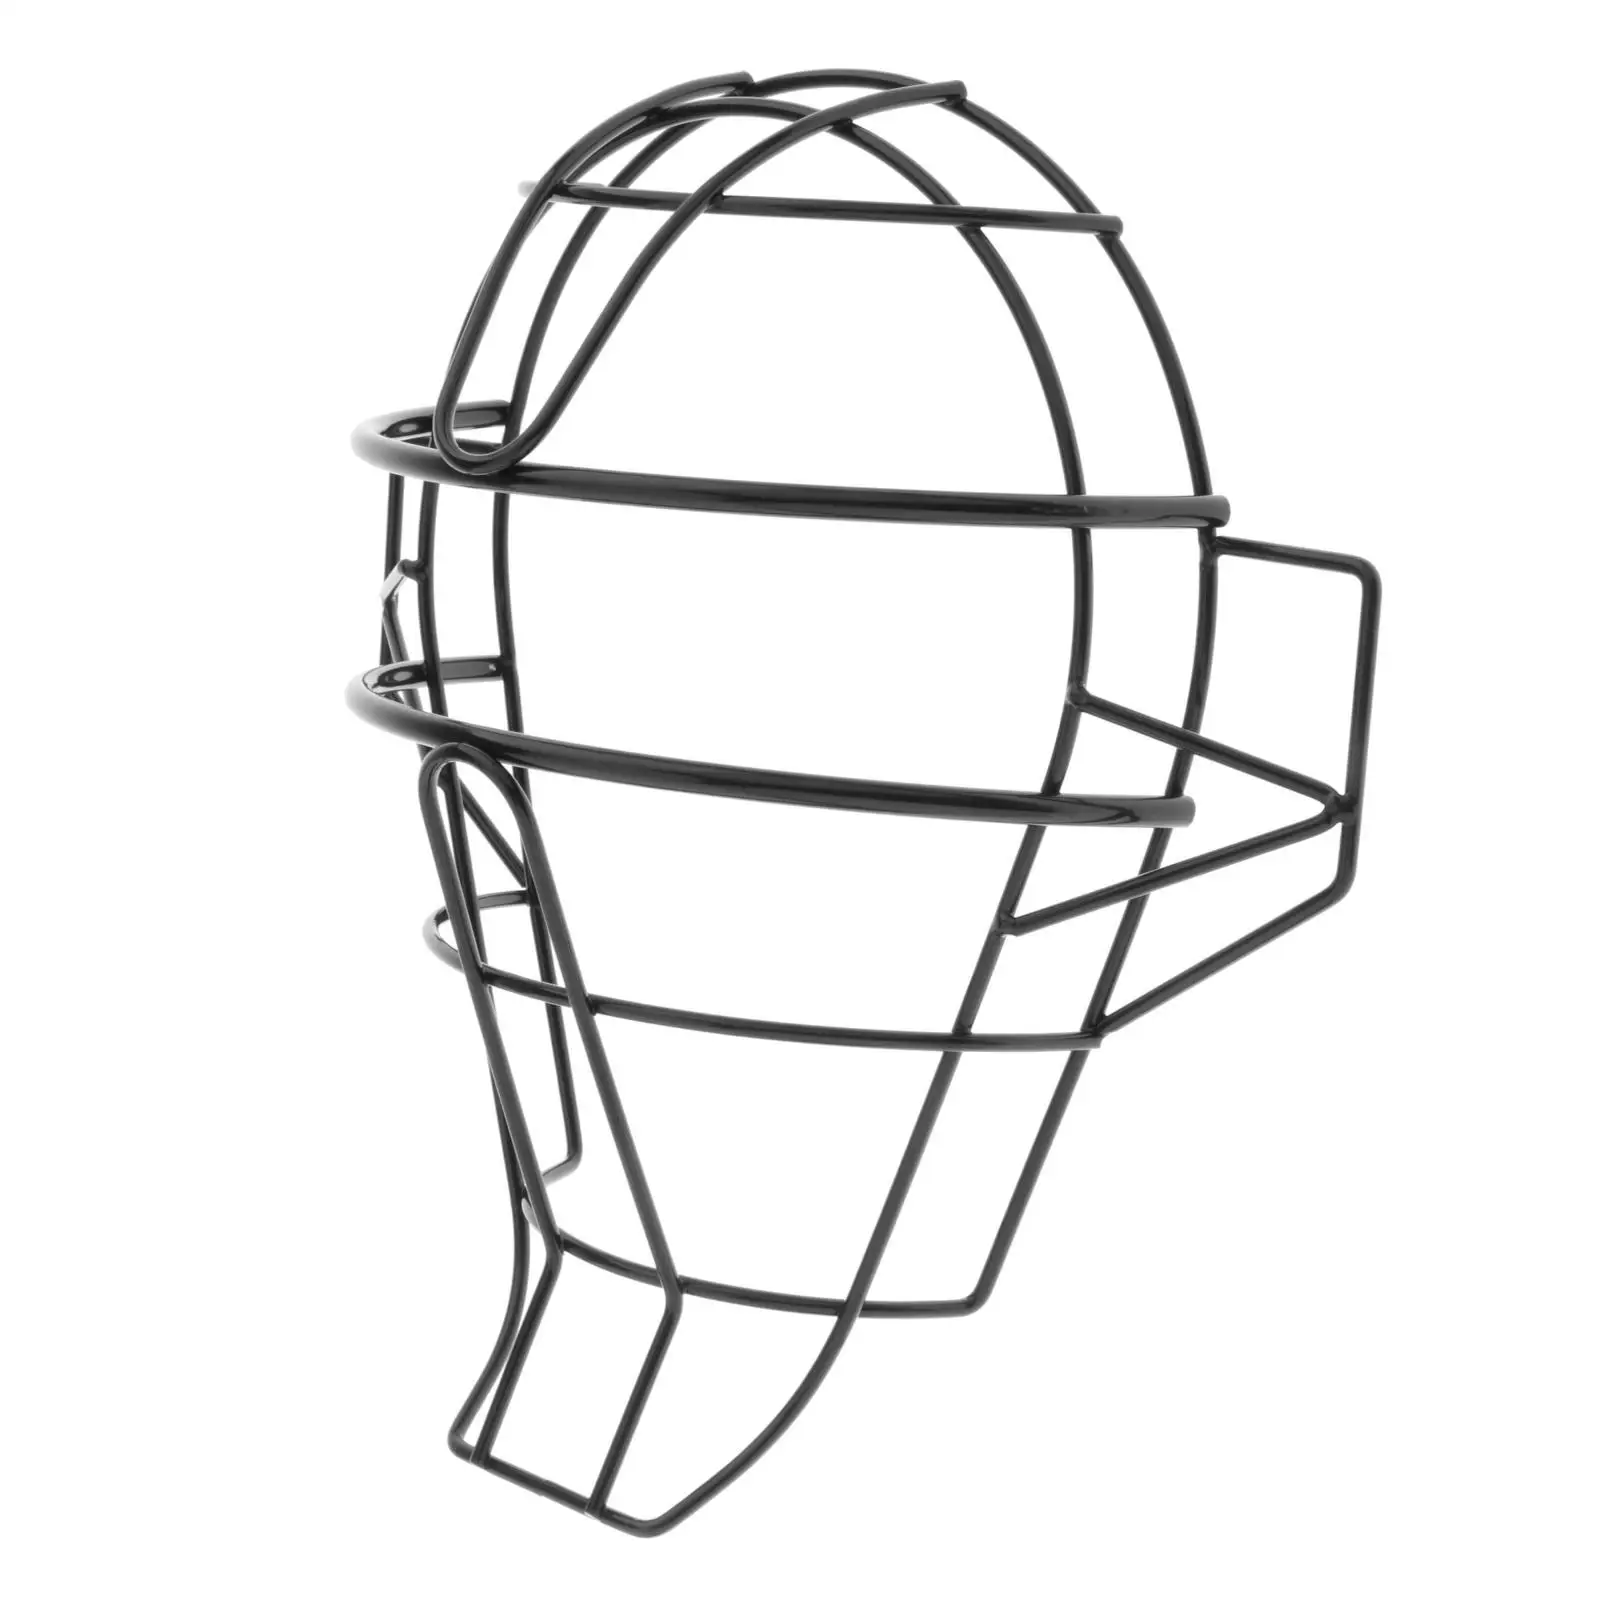 Universal Helmet Face Guard Baseball Softball Protector Junior Ice Hockey